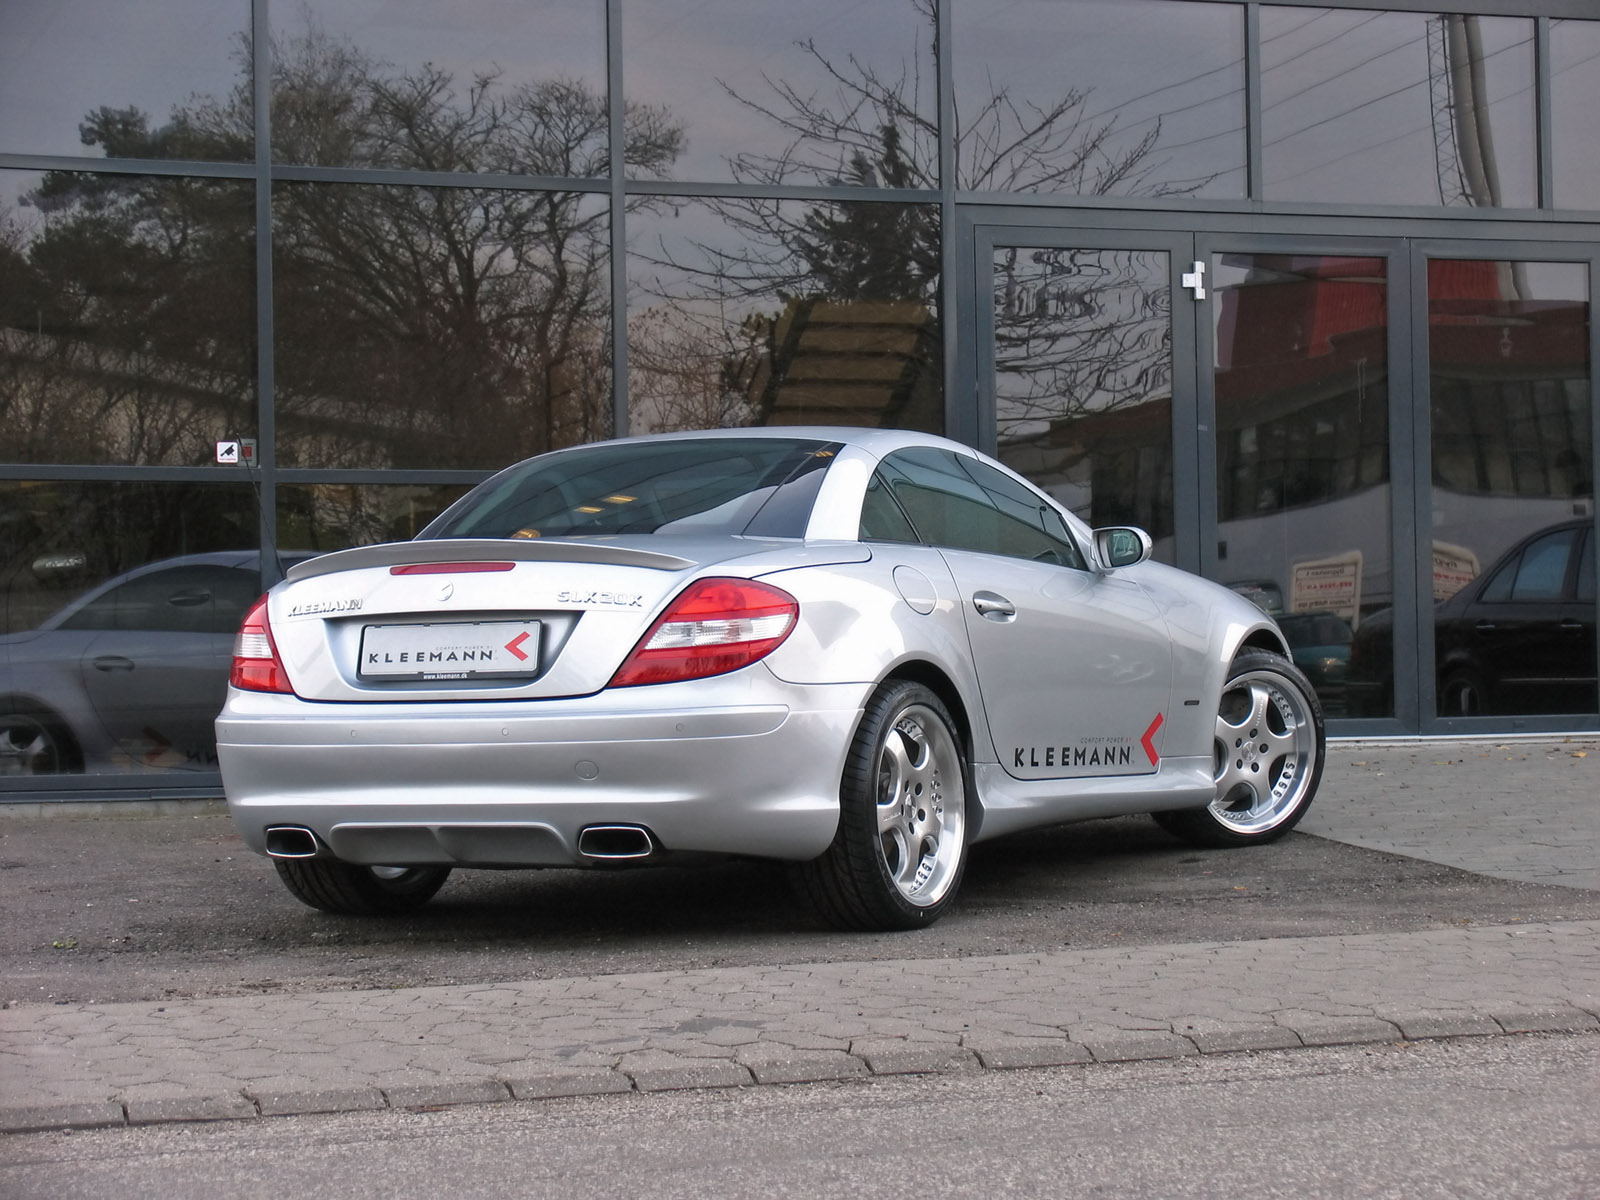 2006, Kleemann, Slk, 20k, Mercedes, Benz, Tuning, Supercar, Supercars Wallpaper